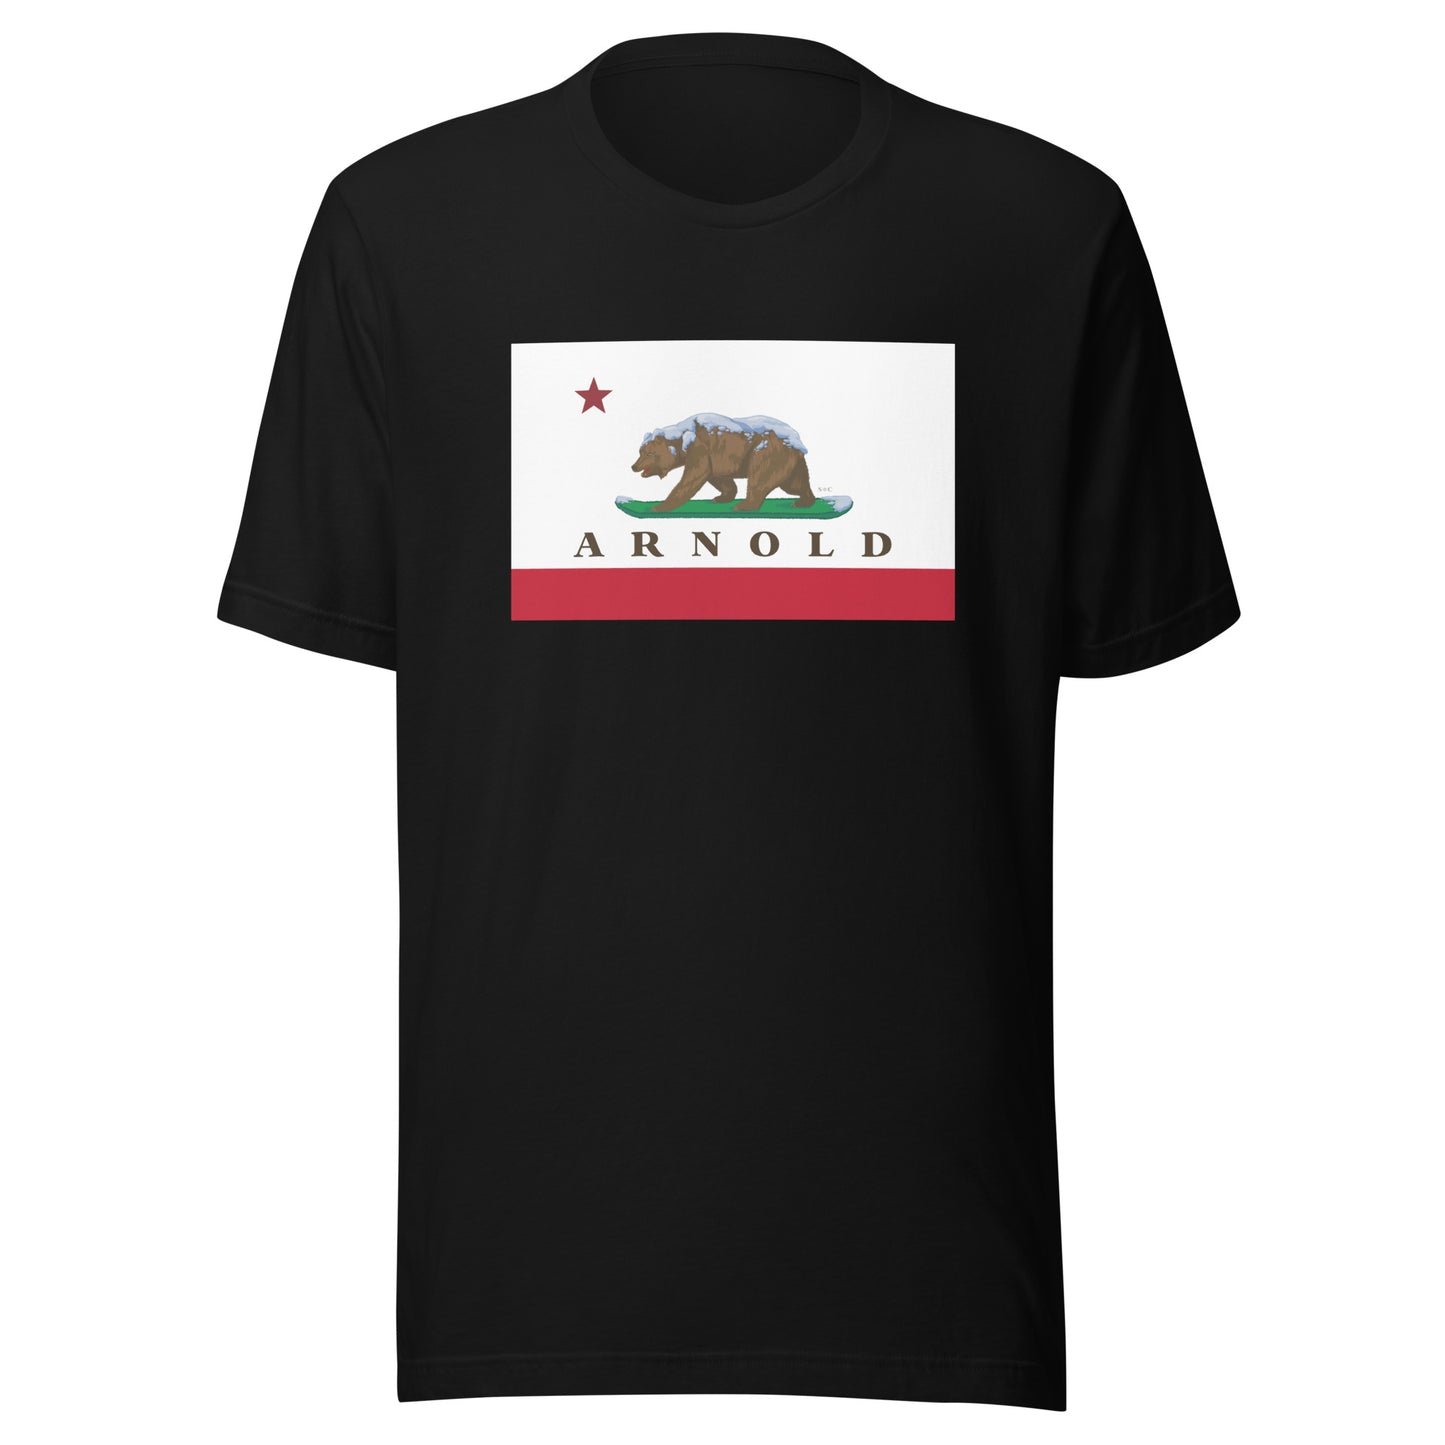 Arnold California black shirt